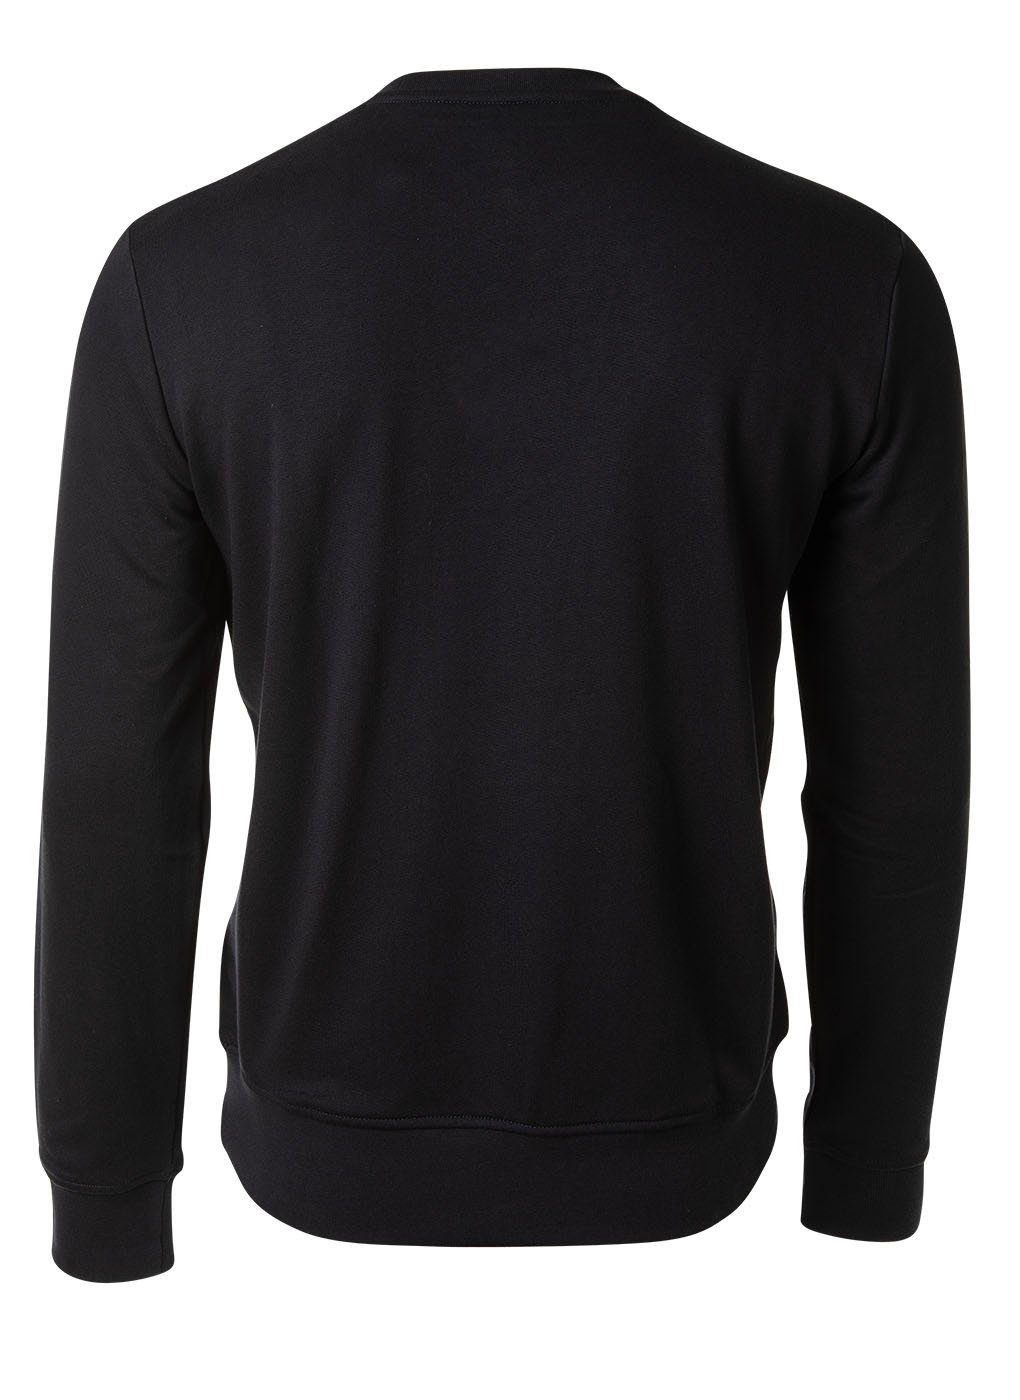 ARMANI EXCHANGE Sweatshirt Herren Sweatshirt Pullover, - Logo Marine